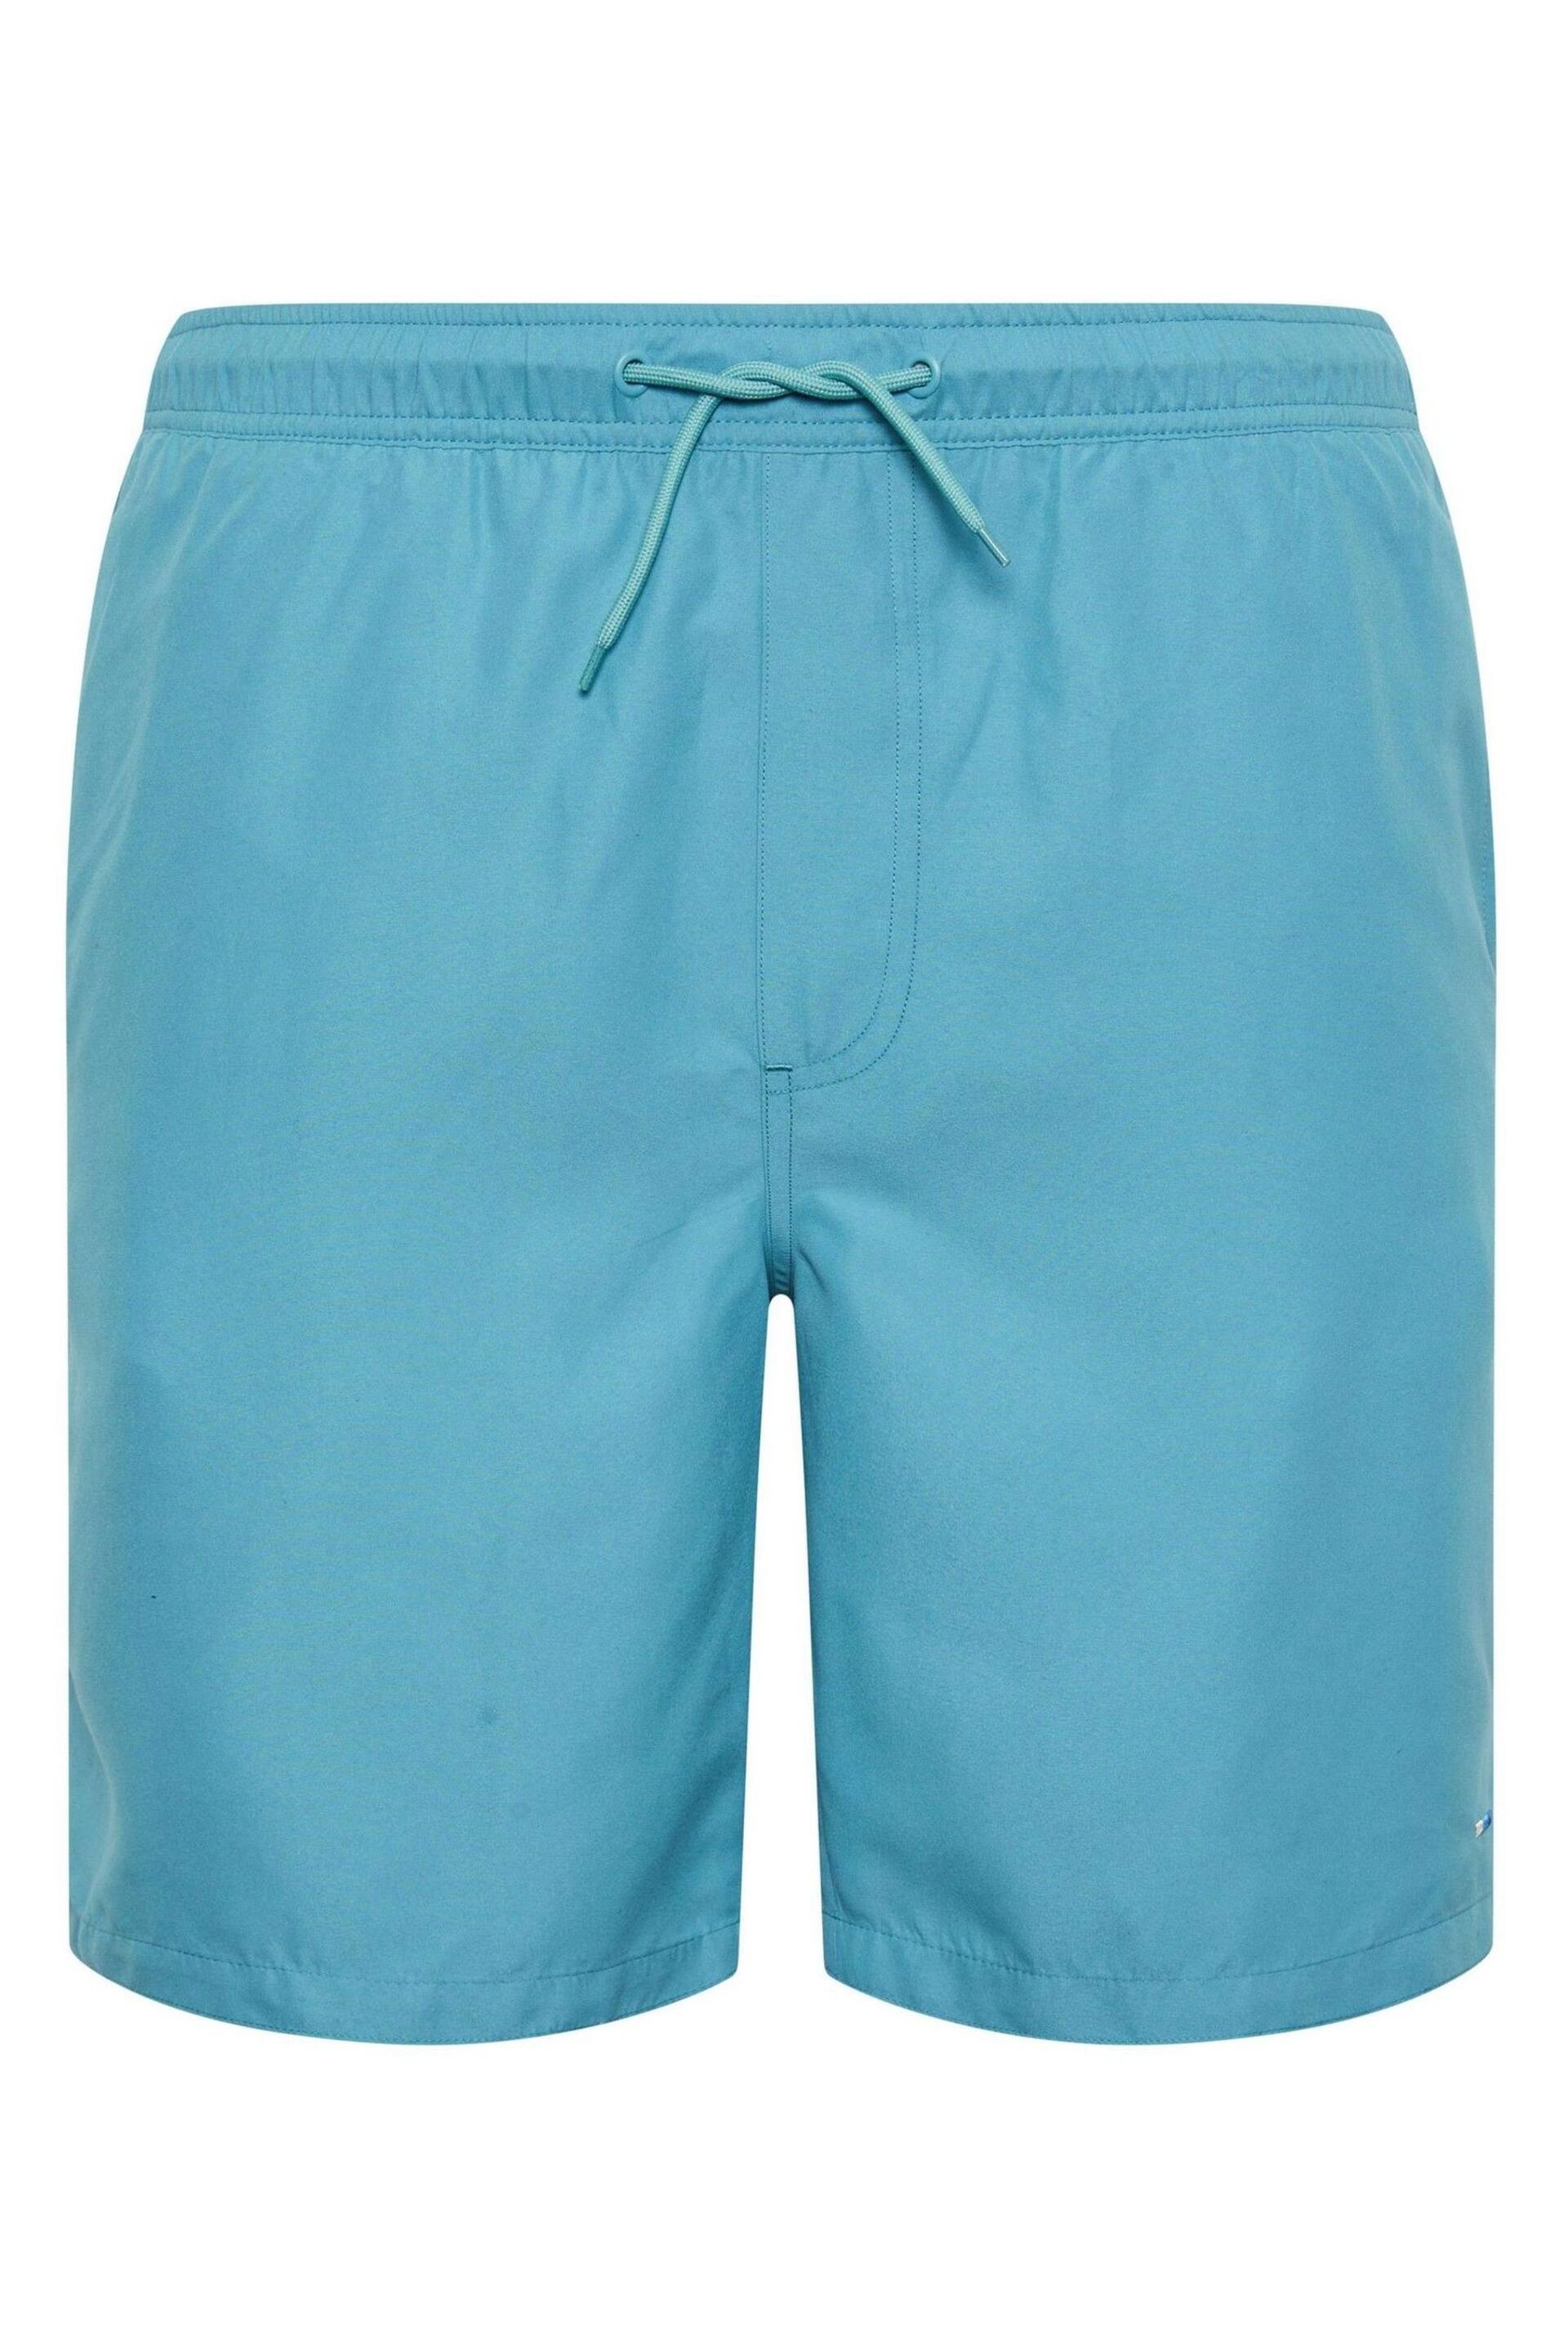 BadRhino Big & Tall Blue Plain Swim Shorts - Image 4 of 5